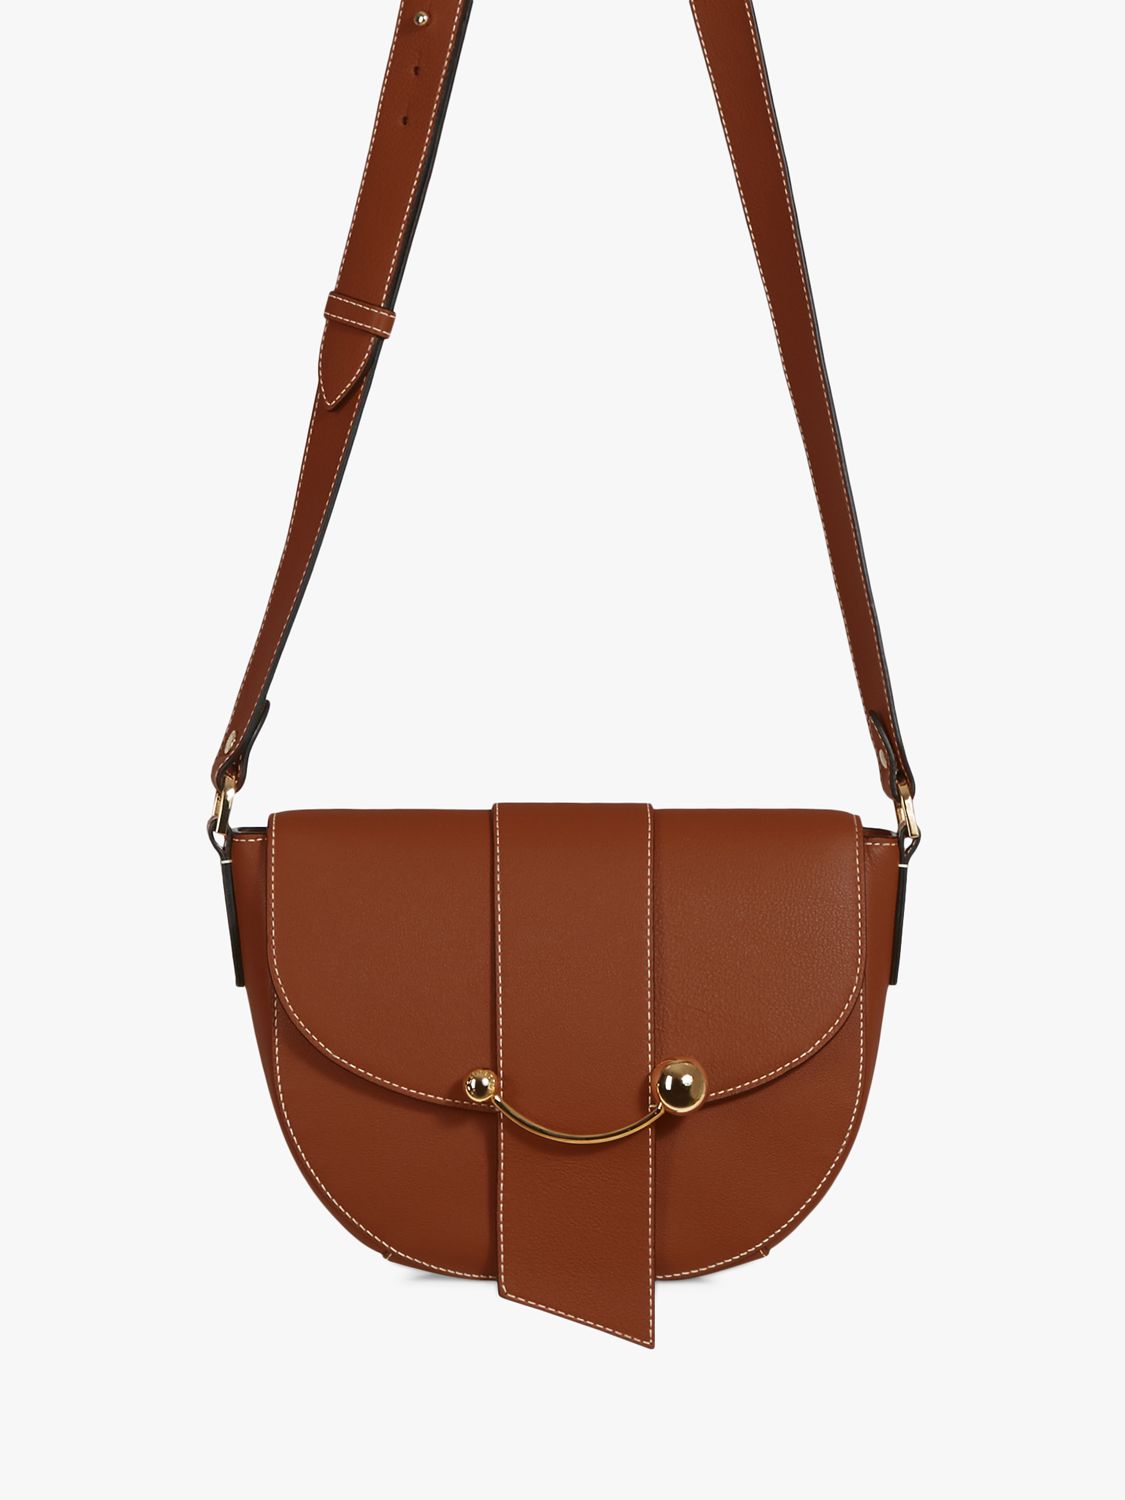 Strathberry Crescent Leather Satchel Bag, Chestnut